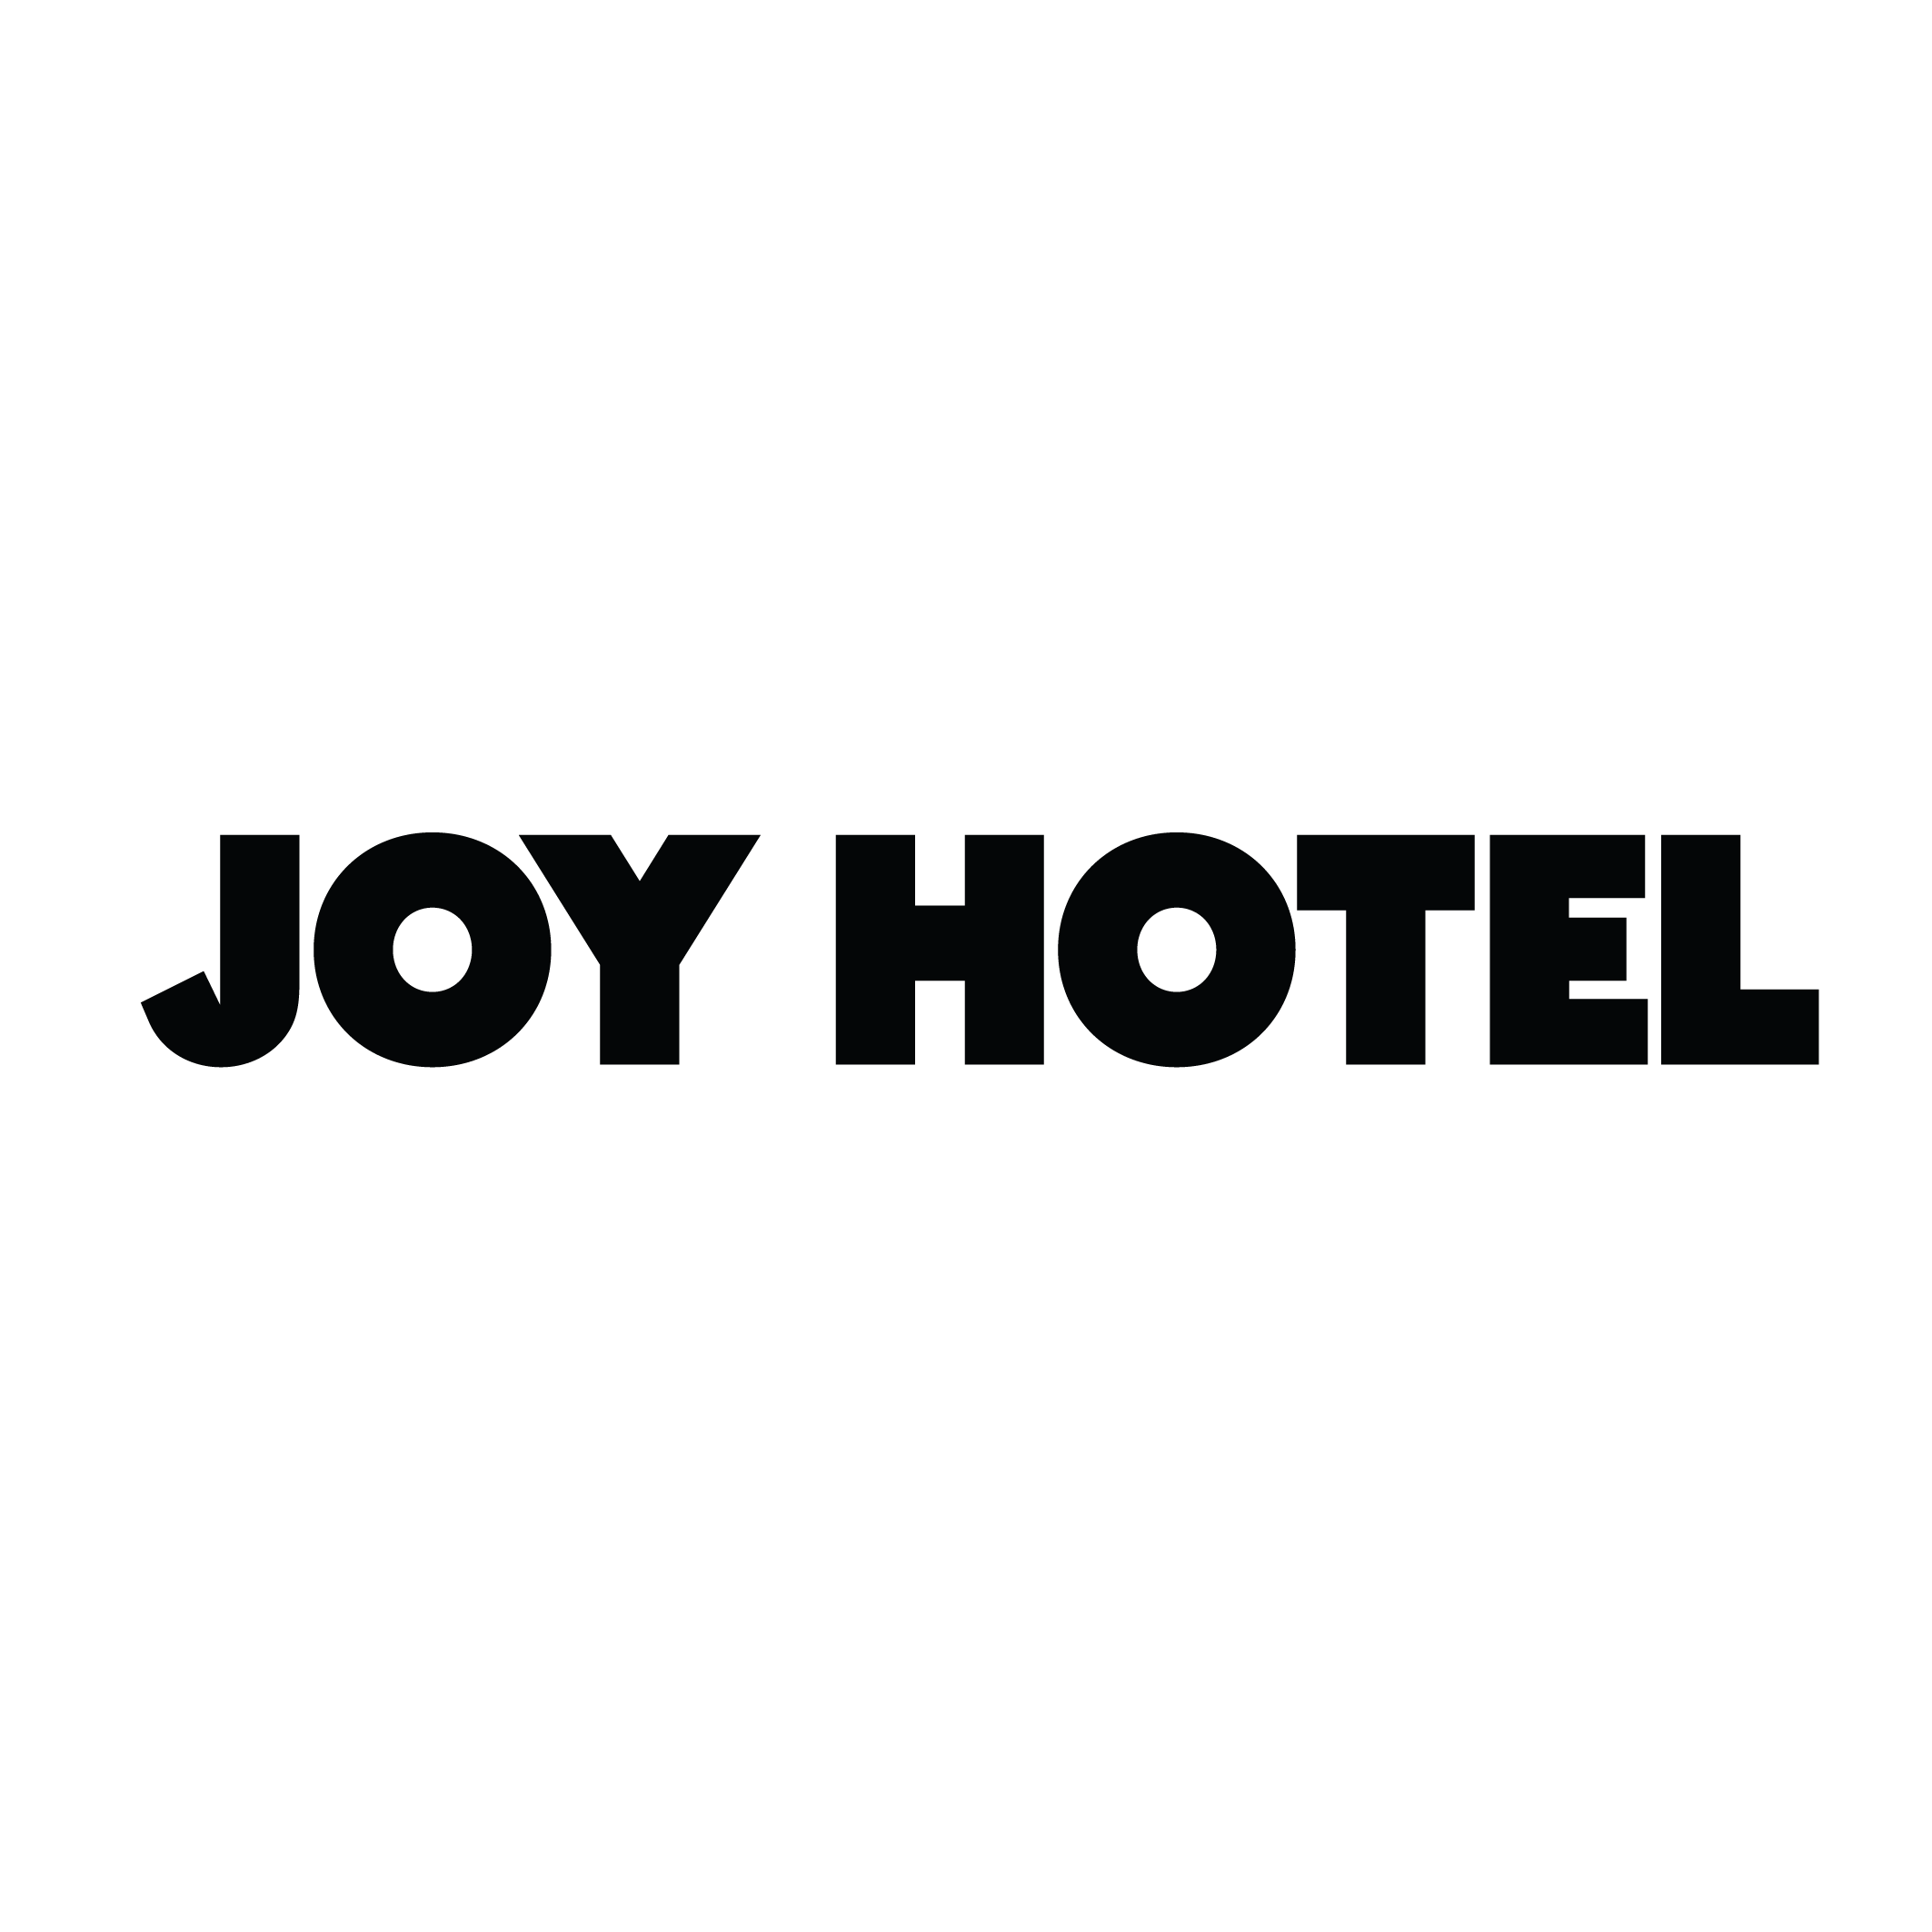 joy hotel_Tavola disegno 1.png